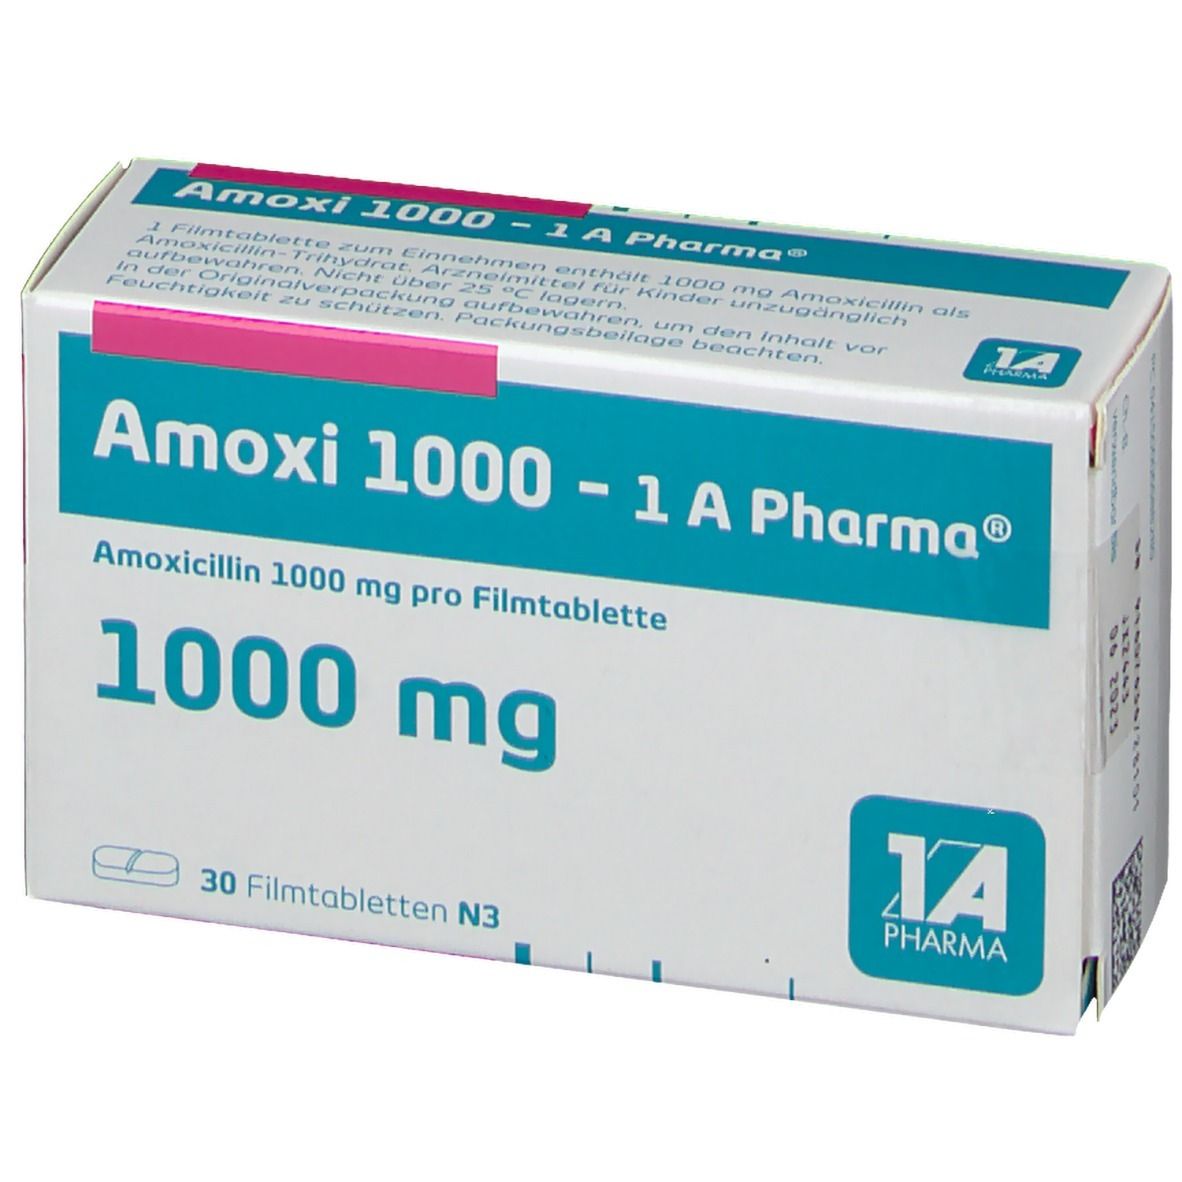 Amoxi 1000 1A Pharma®